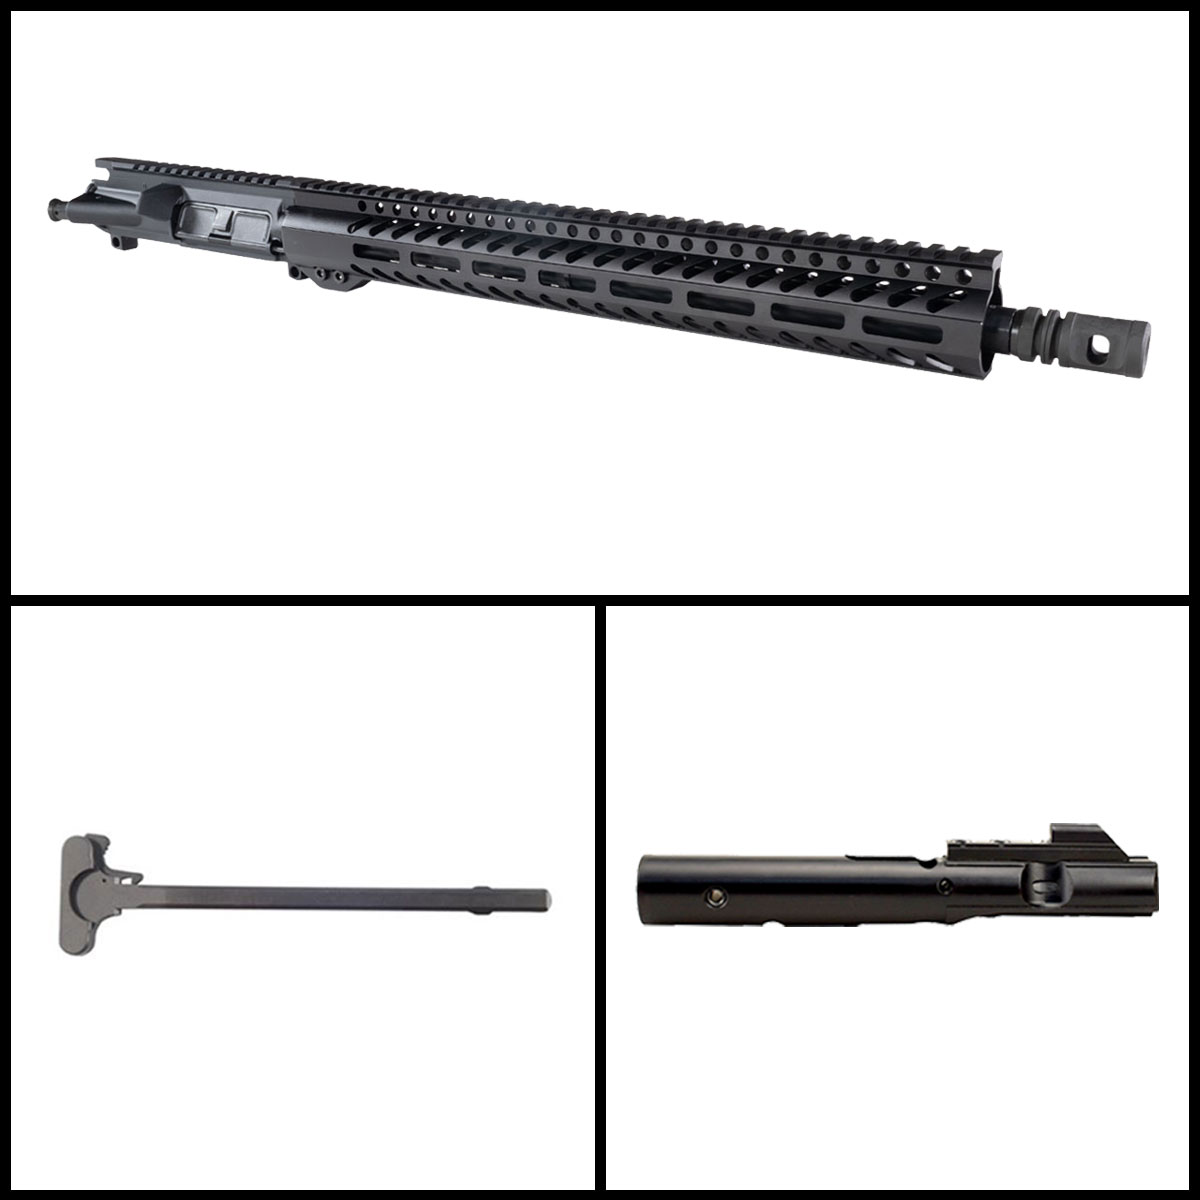 DTT 'Boom Bop' 16.5-inch AR-15 9mm Nitride Rifle Complete Upper Build Kit